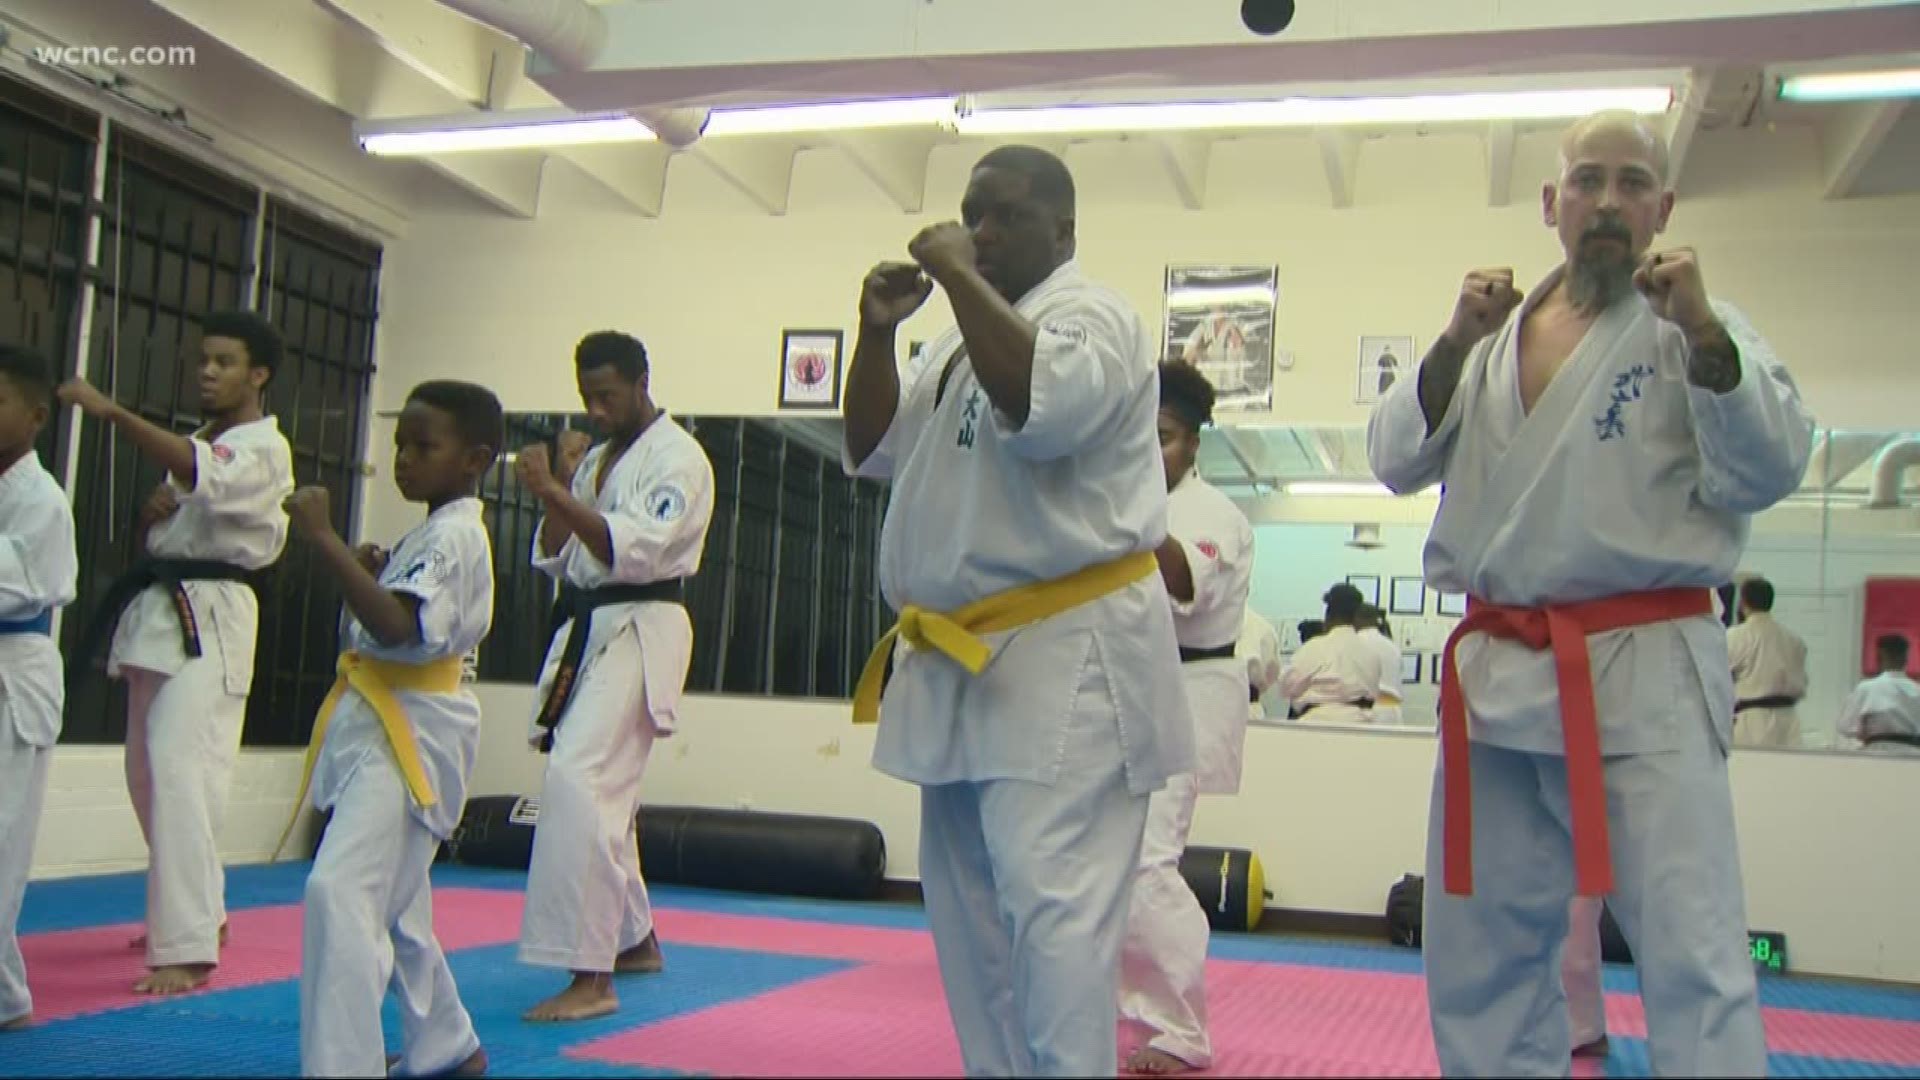 Bushiken Karate Charlotte Dojo Head Instructor Randall Ephraim performed what he calls basic self-defense move then escorted the guy out.